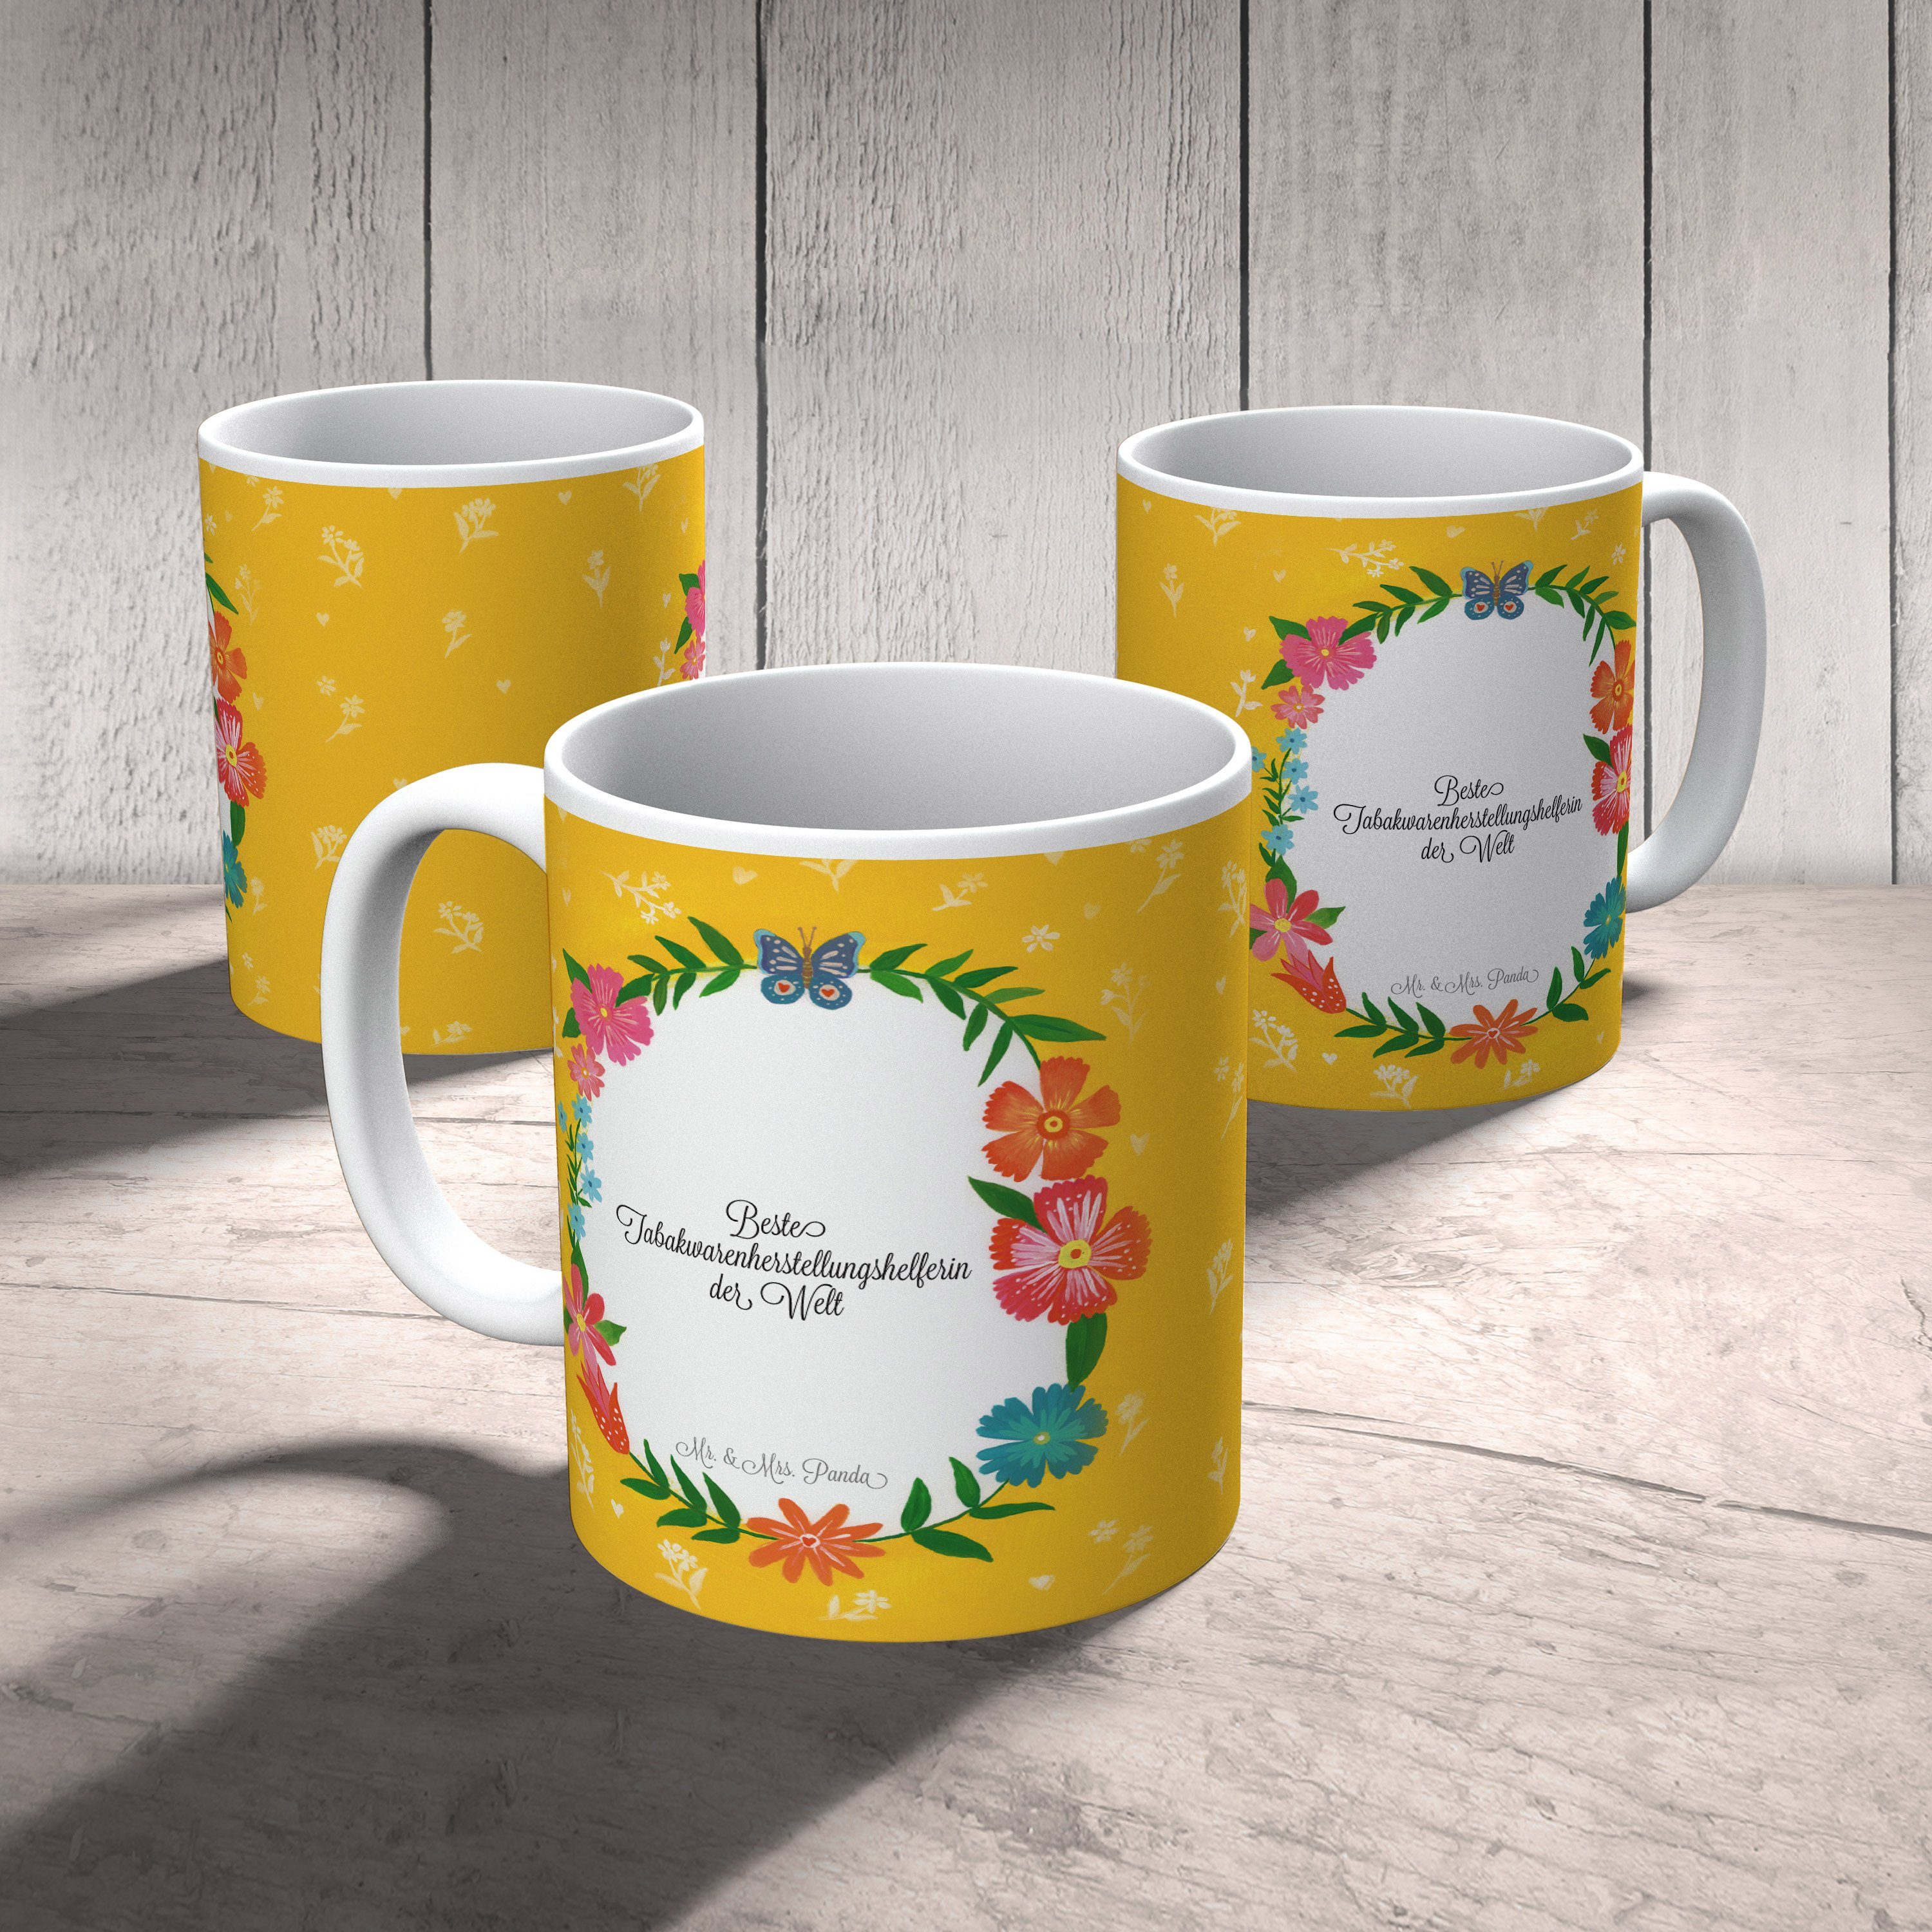 Mr. & Mrs. Tabakwarenherstellungshelferin Keramik Abschluss, Kaffeetasse, - Be, Geschenk, Panda Tasse